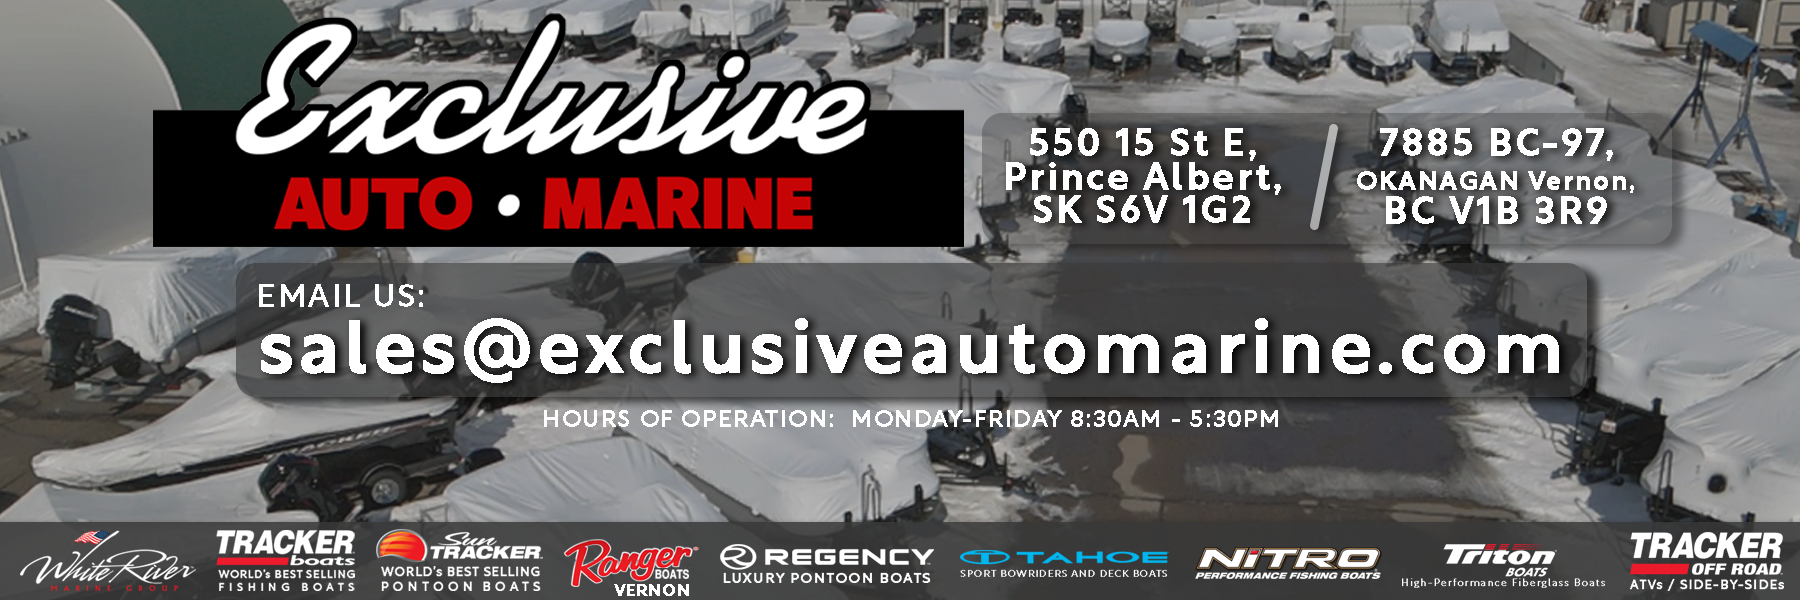 Exclusive Auto Marine - Canada's #1 Tracker Marine Dealer! White River Marine Group